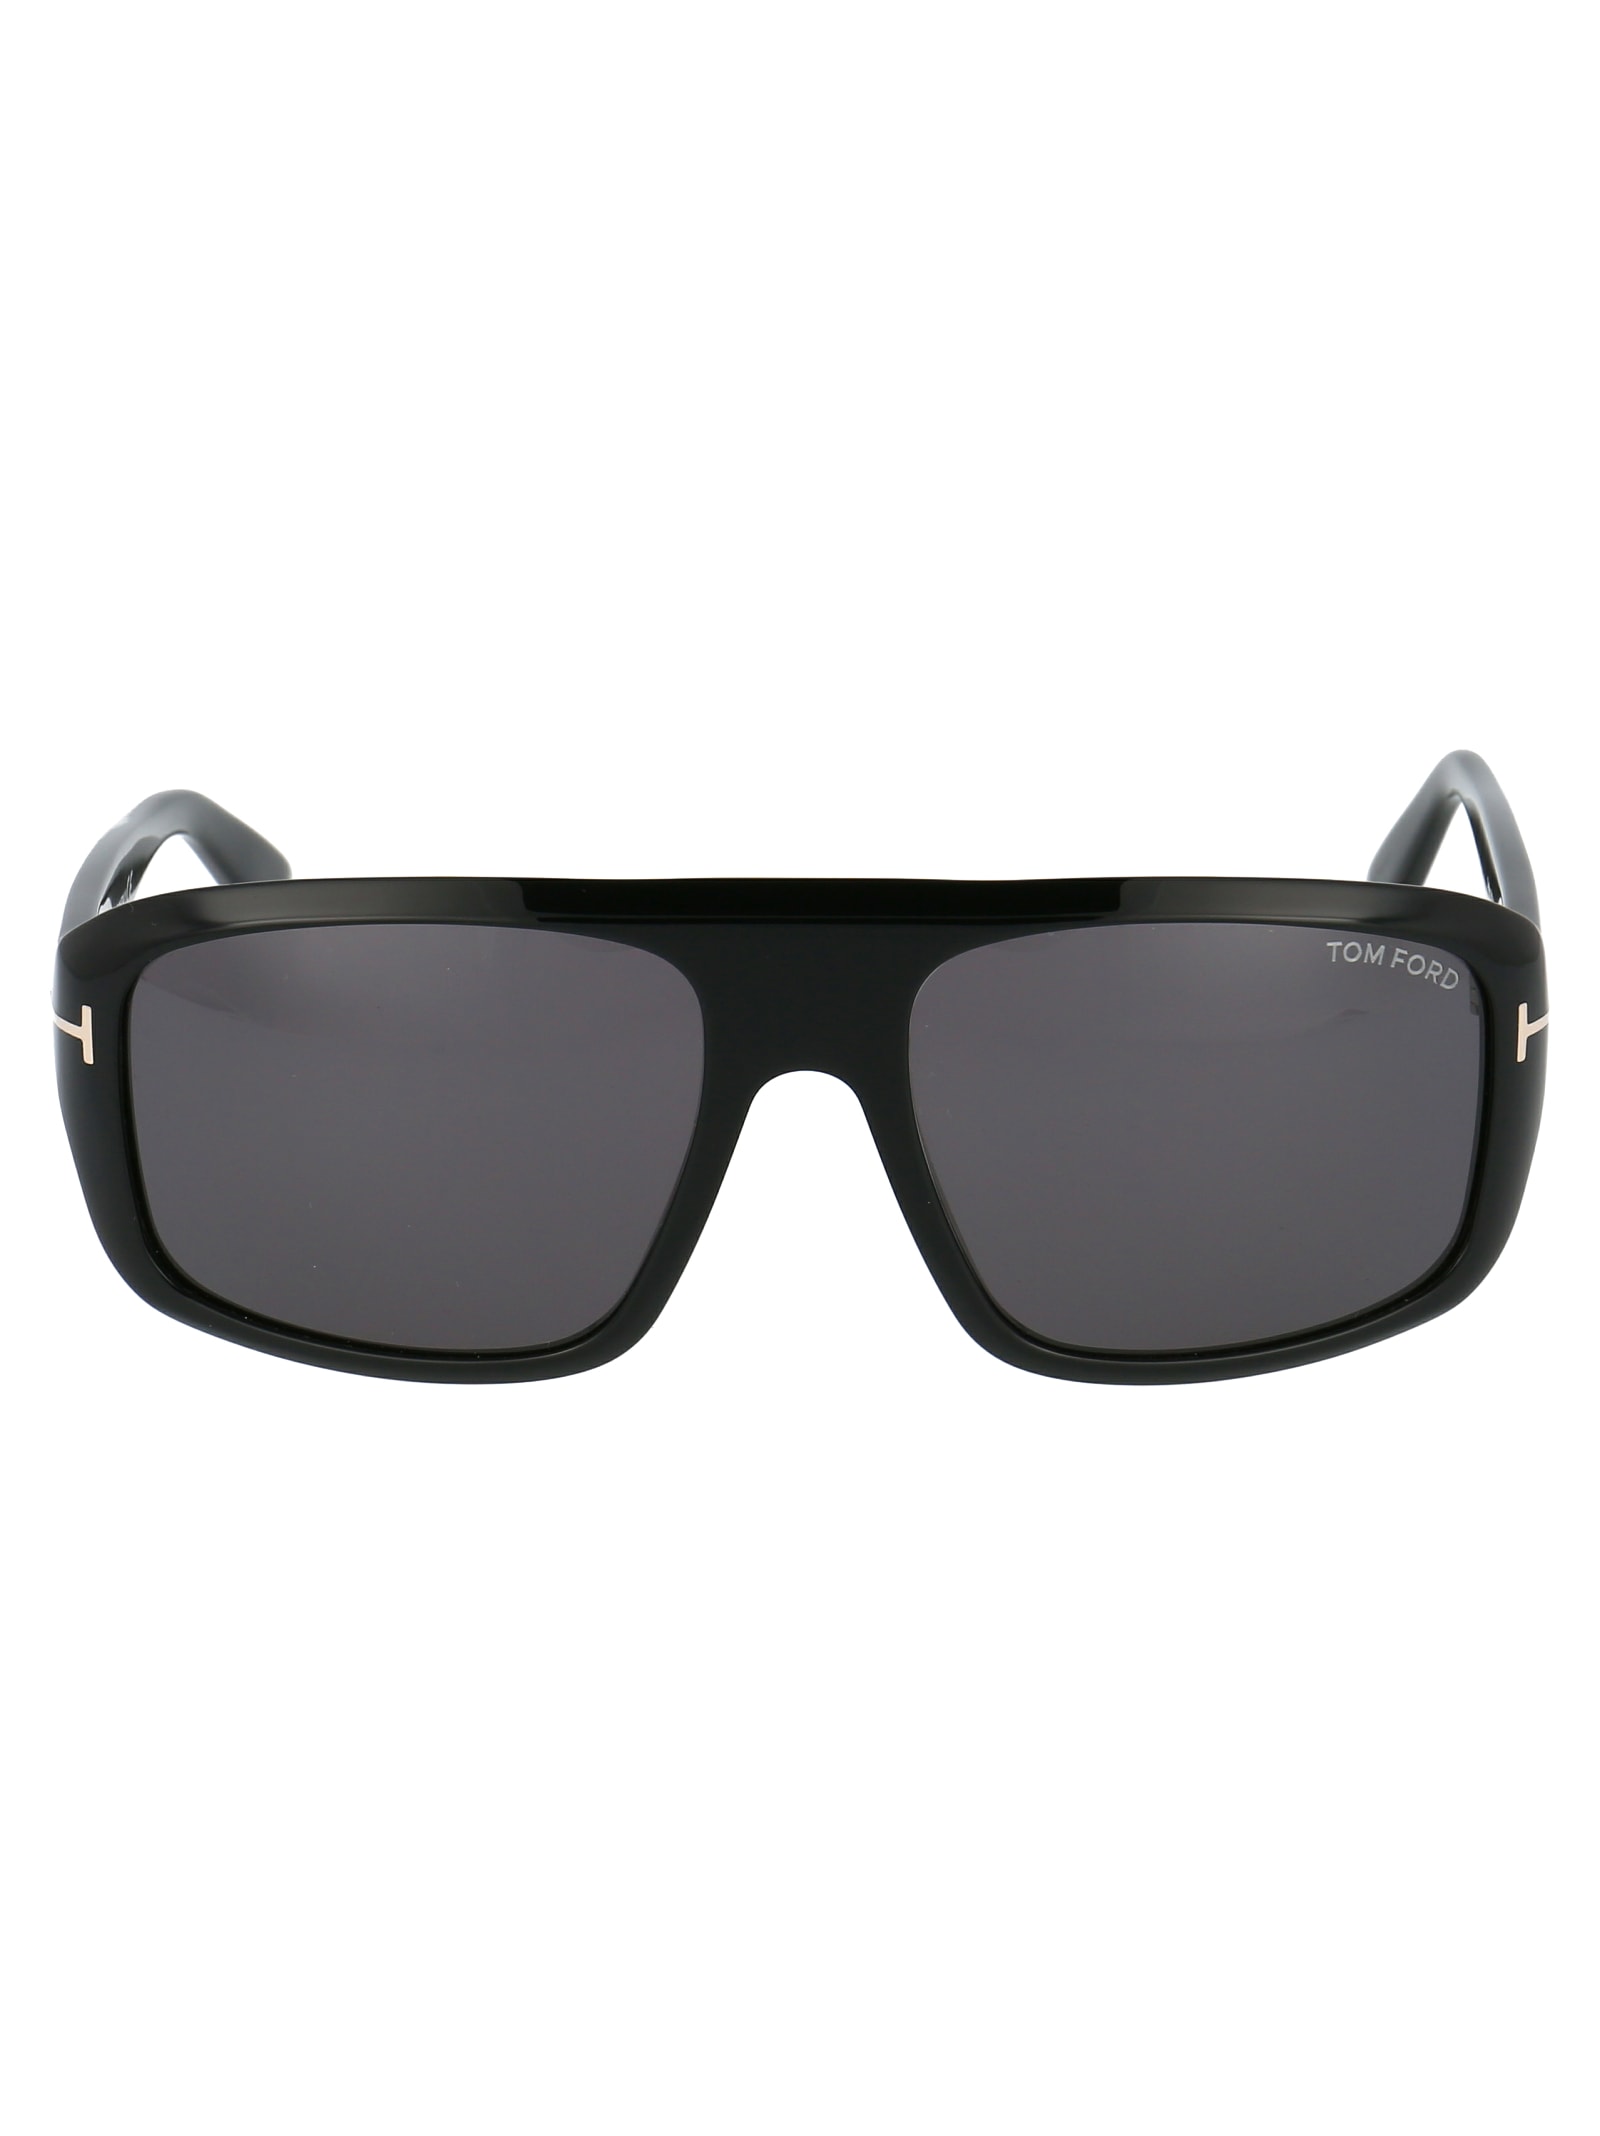 Tom Ford Eyewear Ft0754 Sunglasses